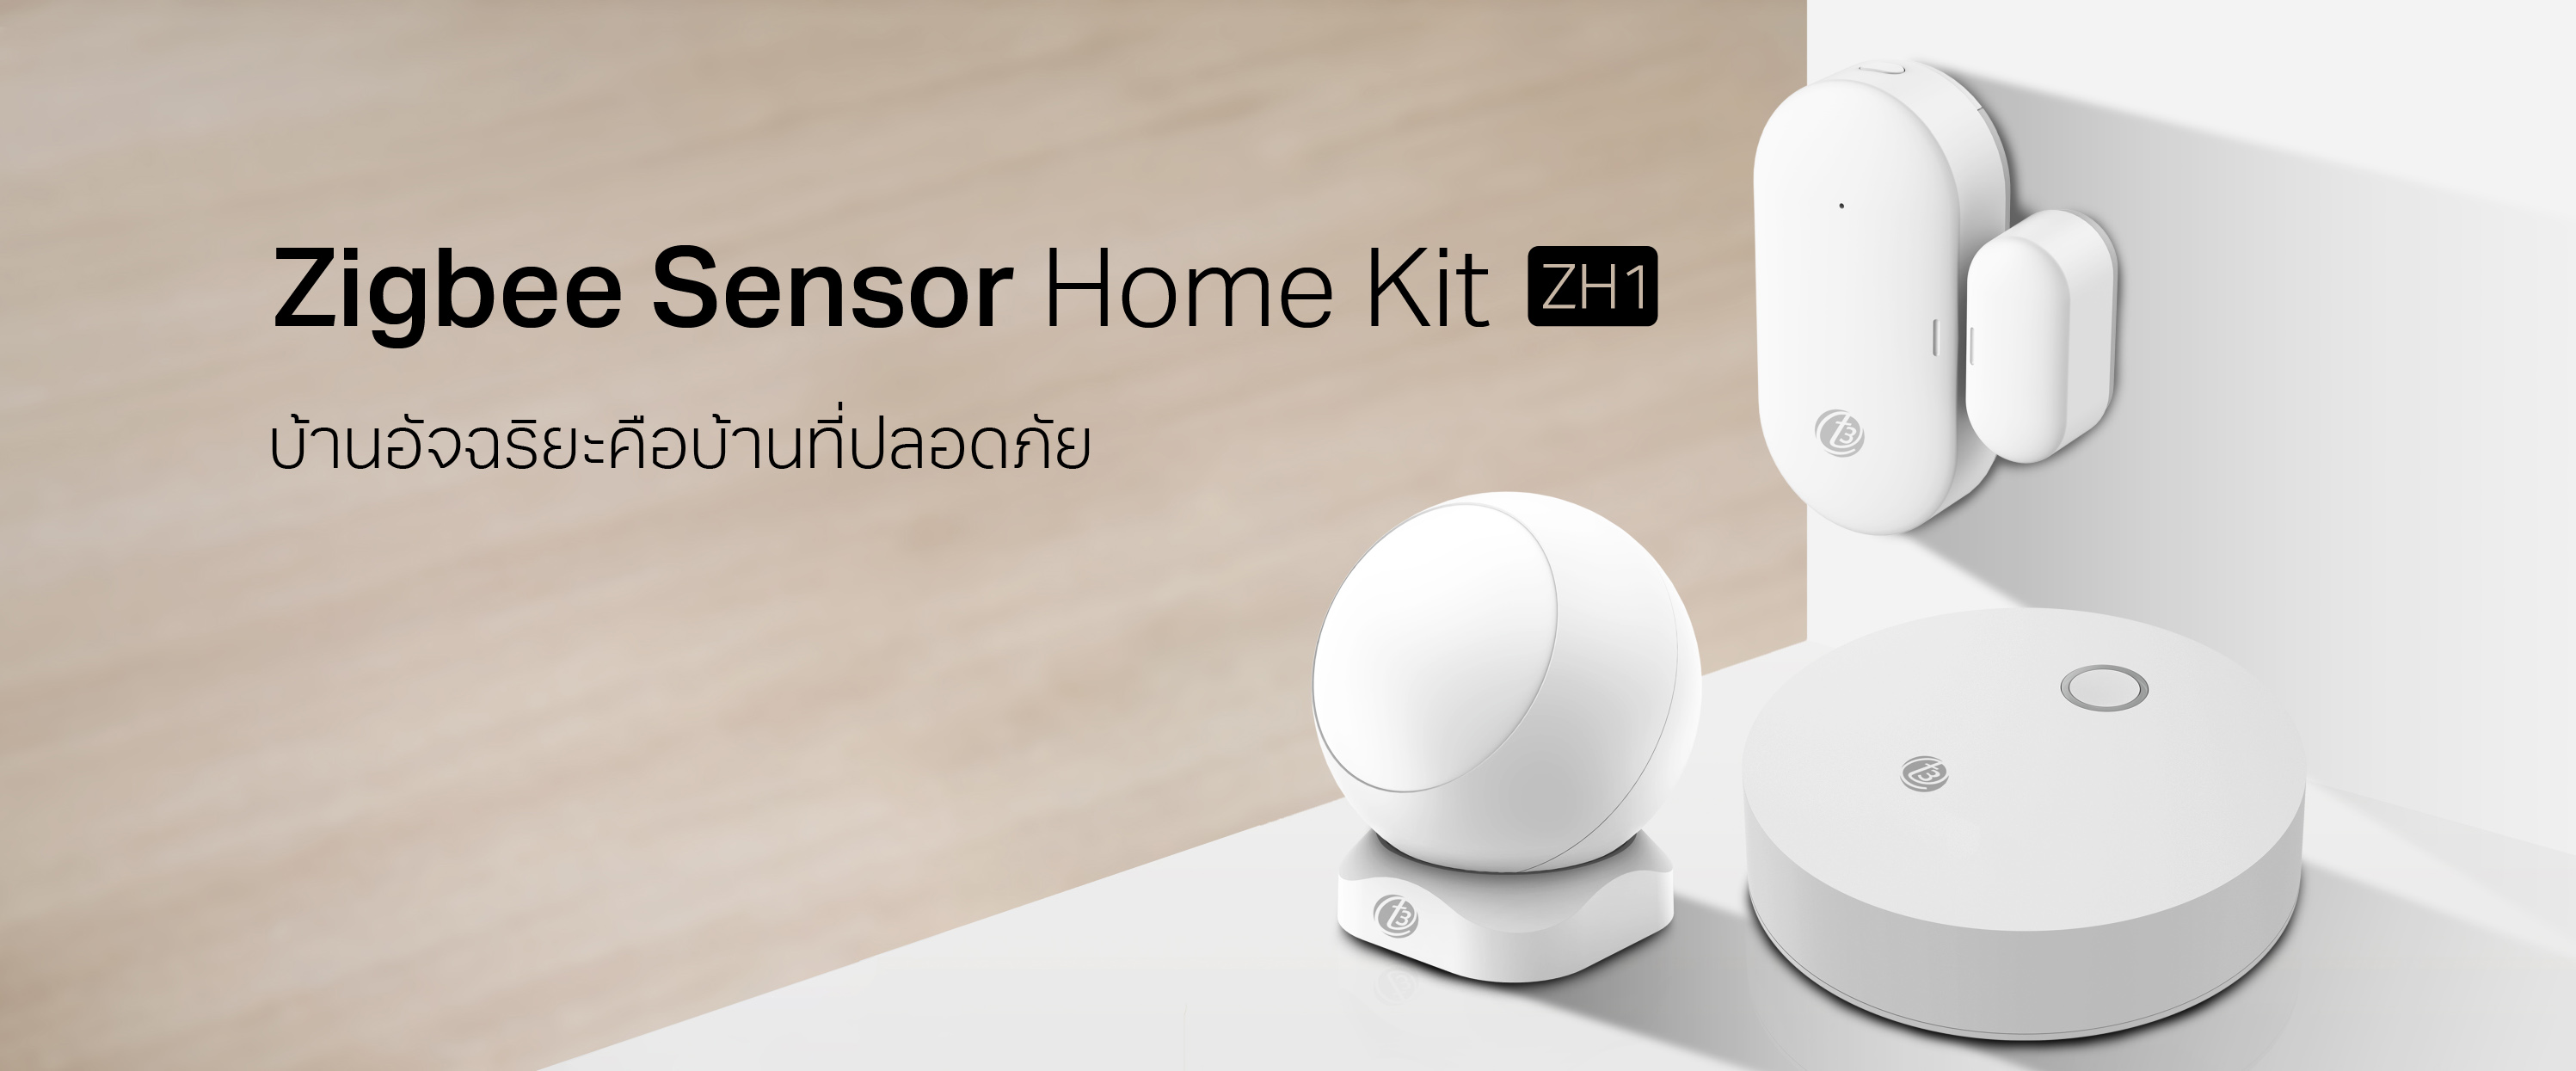 T3 Smart Zigbee Sensor Home Kit ZH1